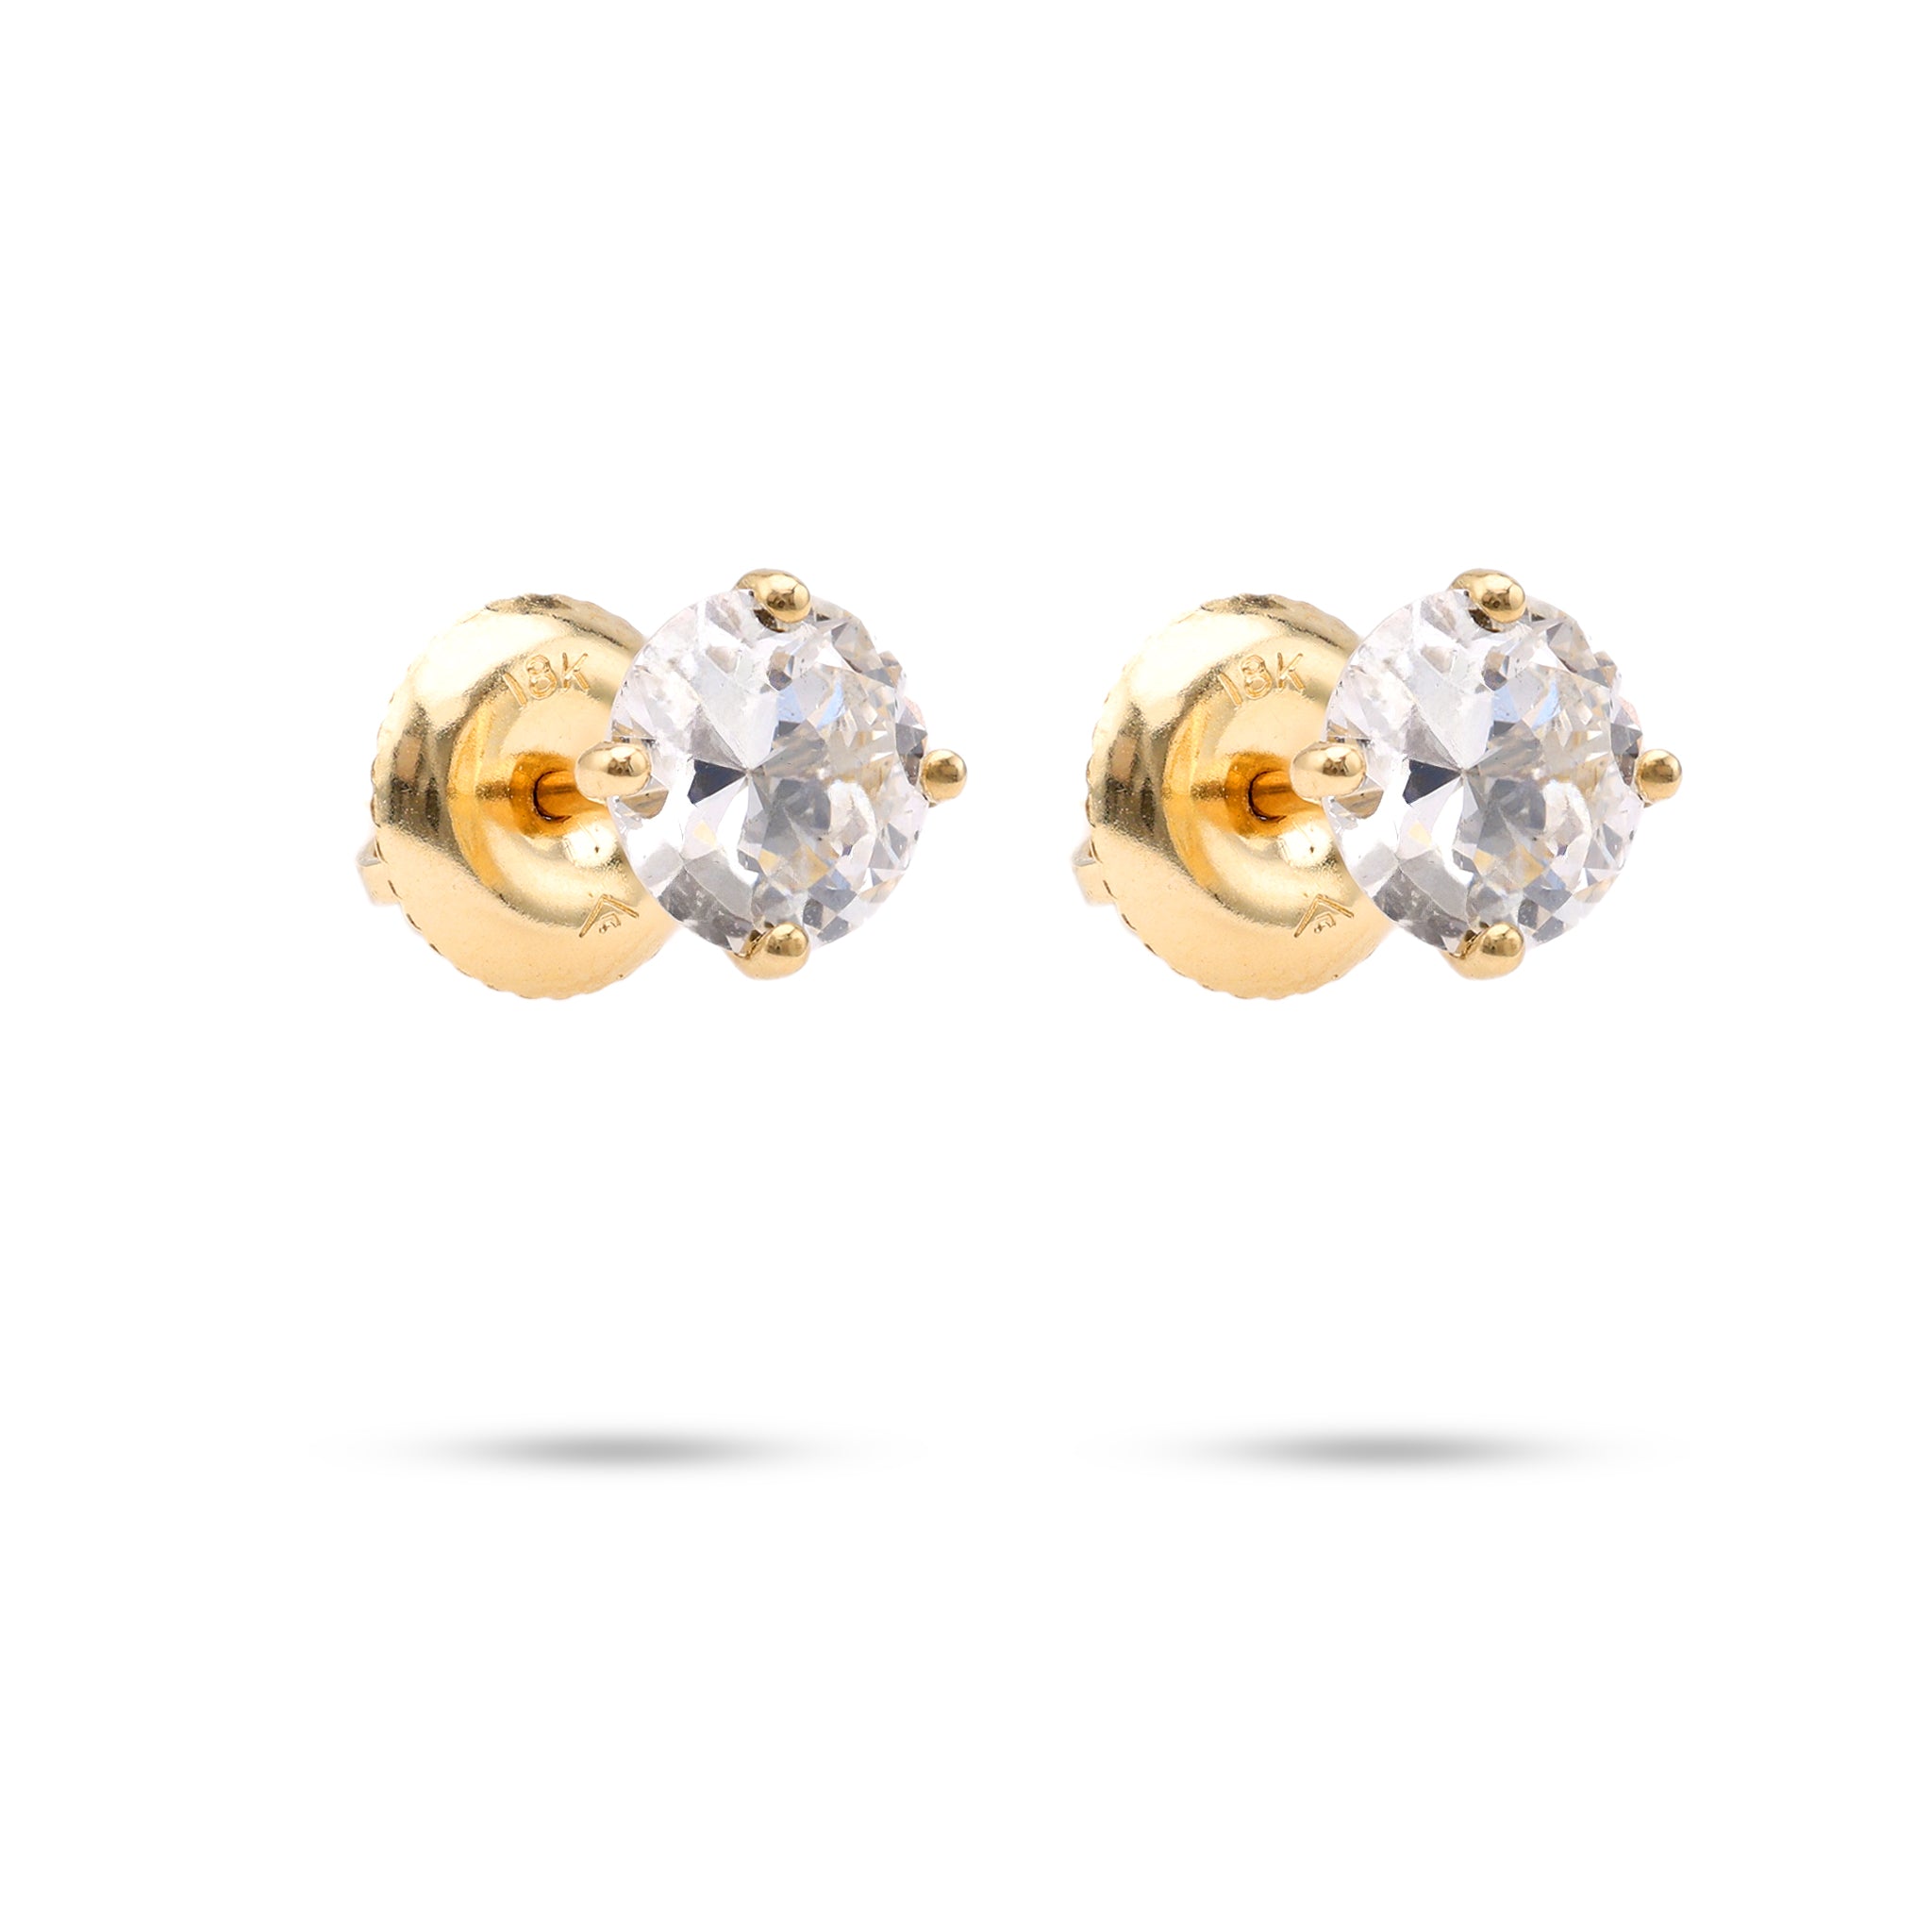 1.32 Carat Total Weight Diamond 18k Yellow Gold Stud Earrings Earrings Jack Weir & Sons   